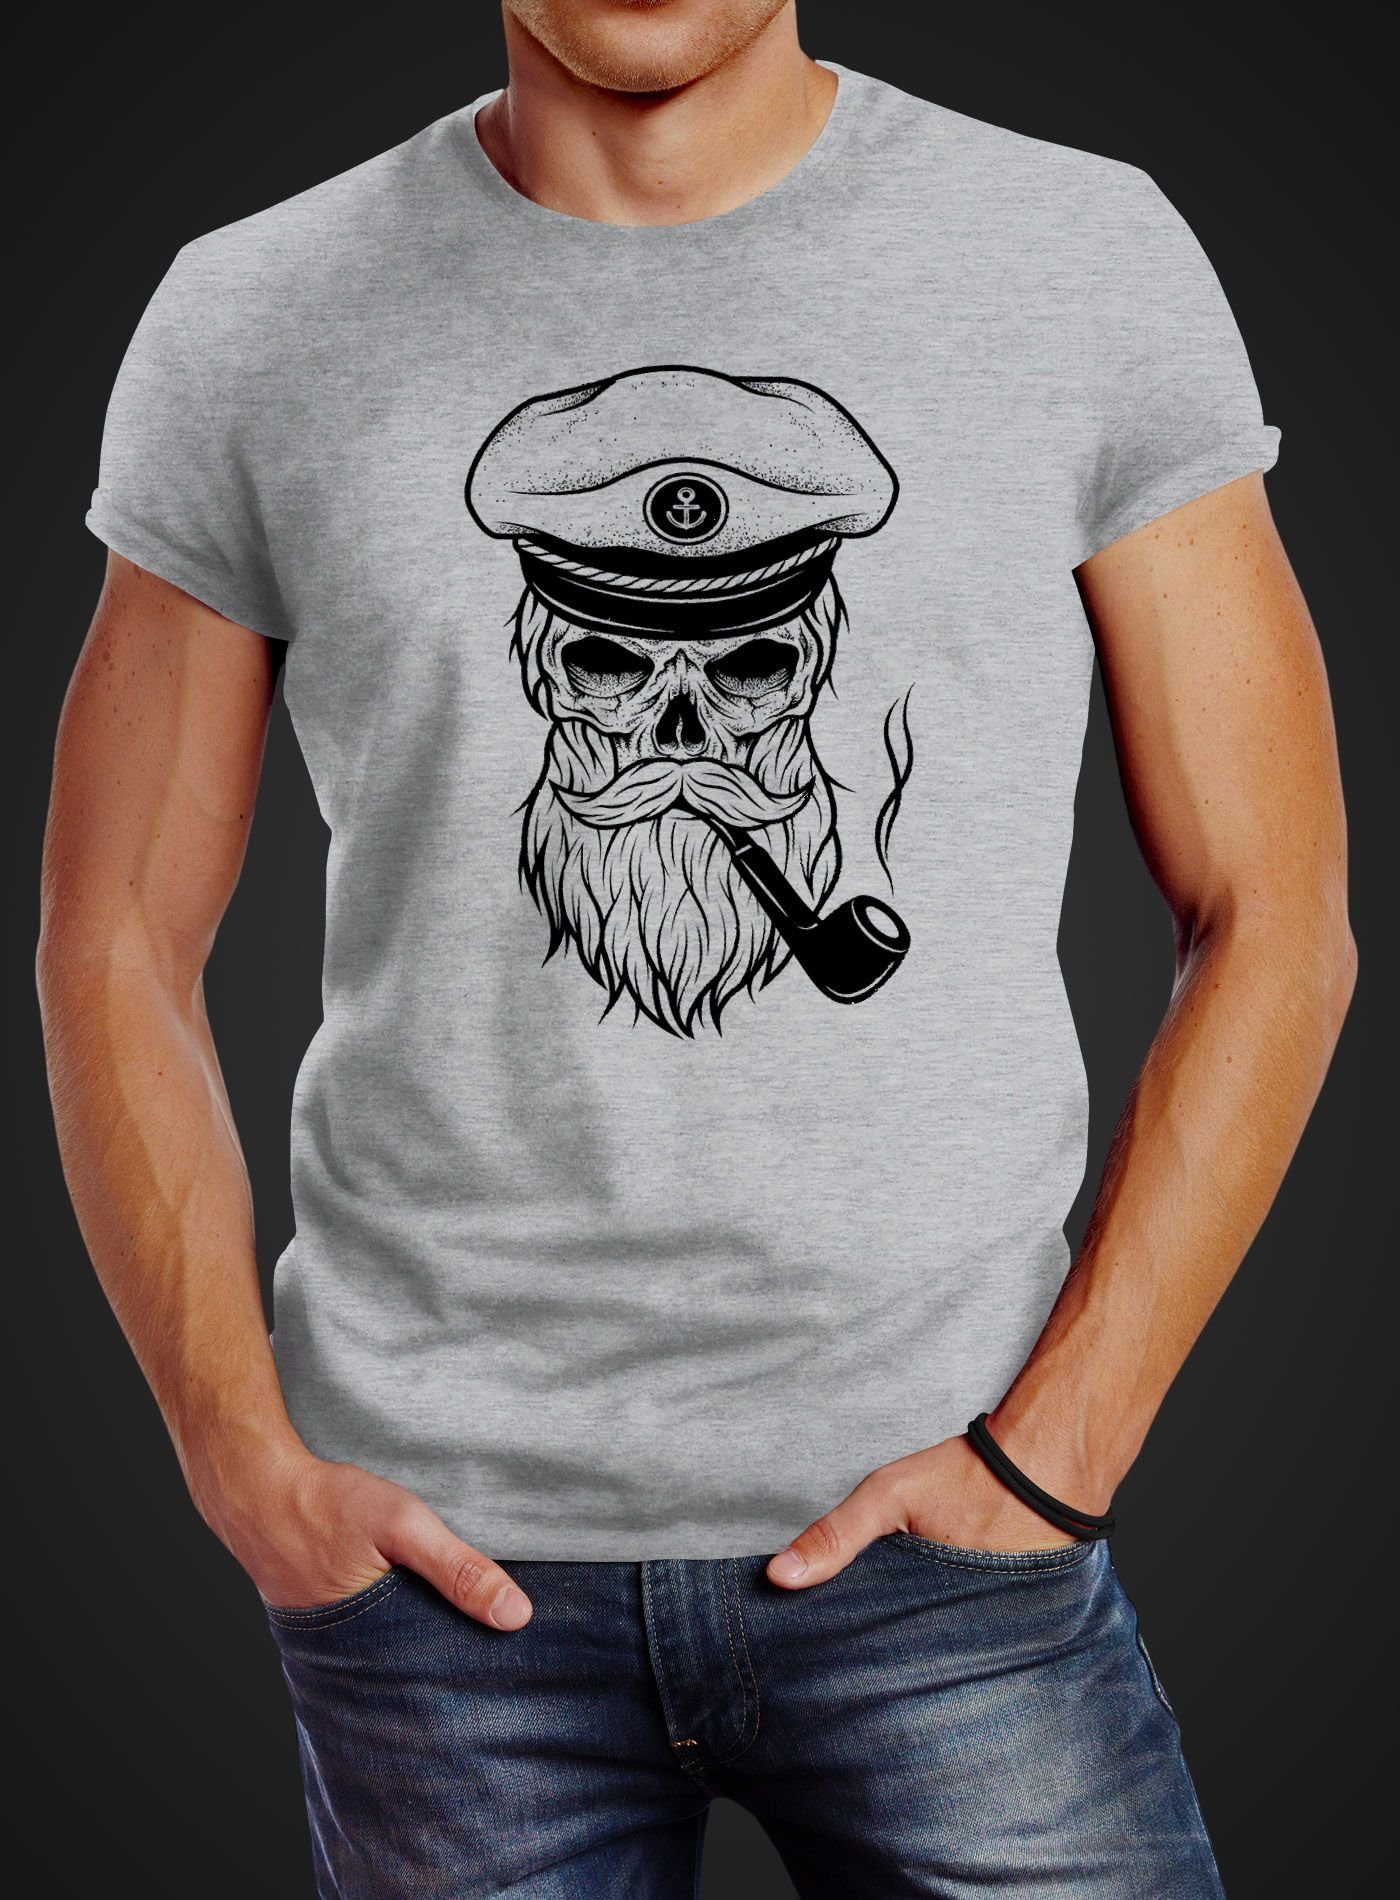 Neverless® Print-Shirt Print Neverless mit Slim T-Shirt Kapitän Herren Fit Hipster Totenkopf Skull Captain grau